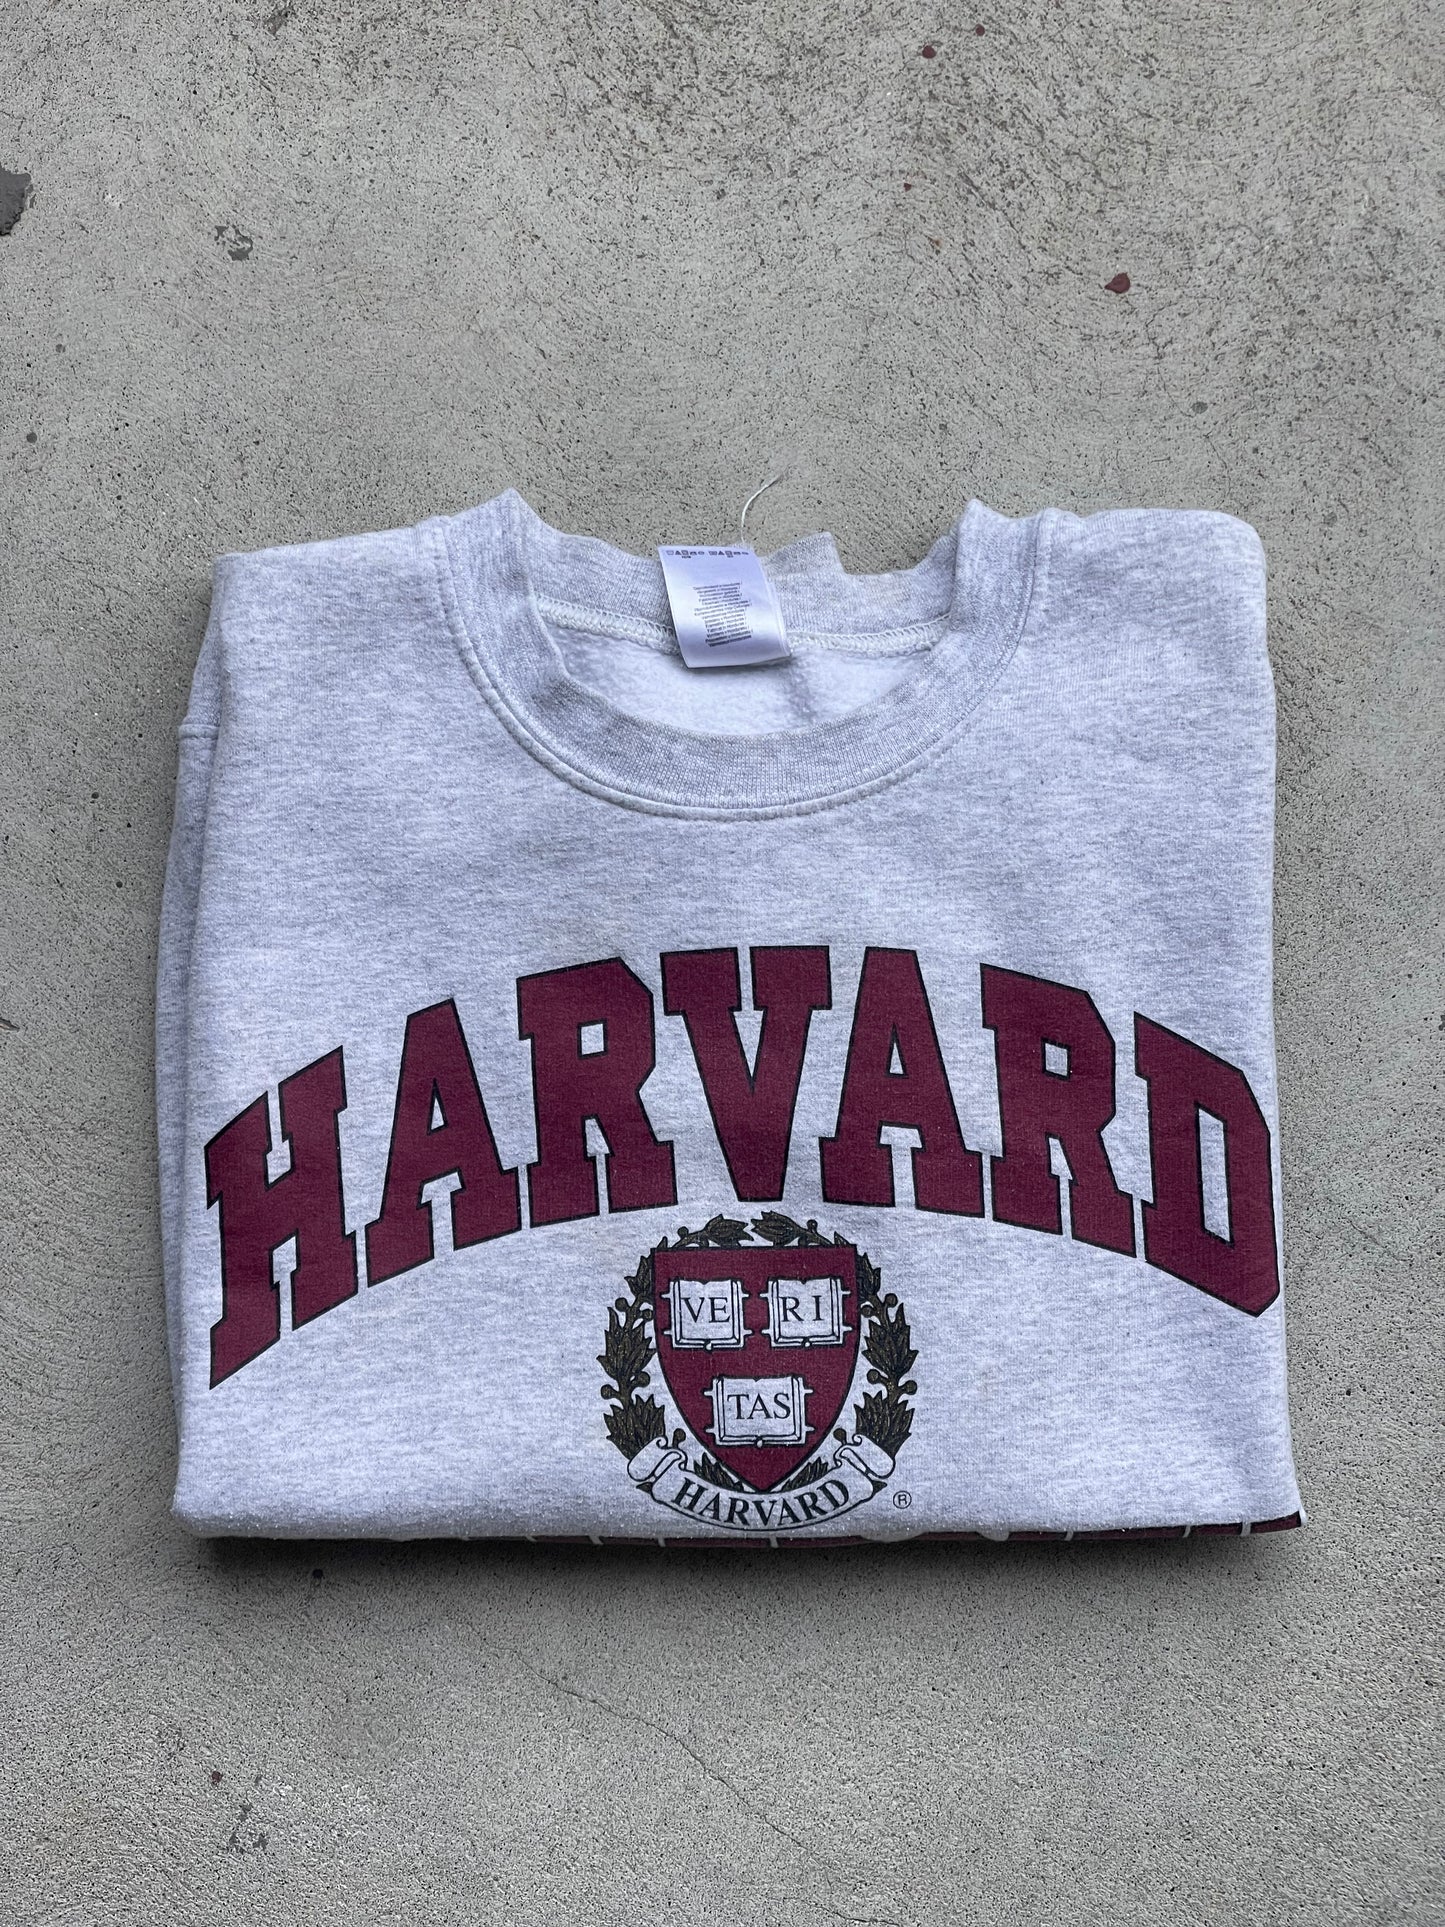 Pre-loved Harvard Crewneck Sweatshirt - S/M